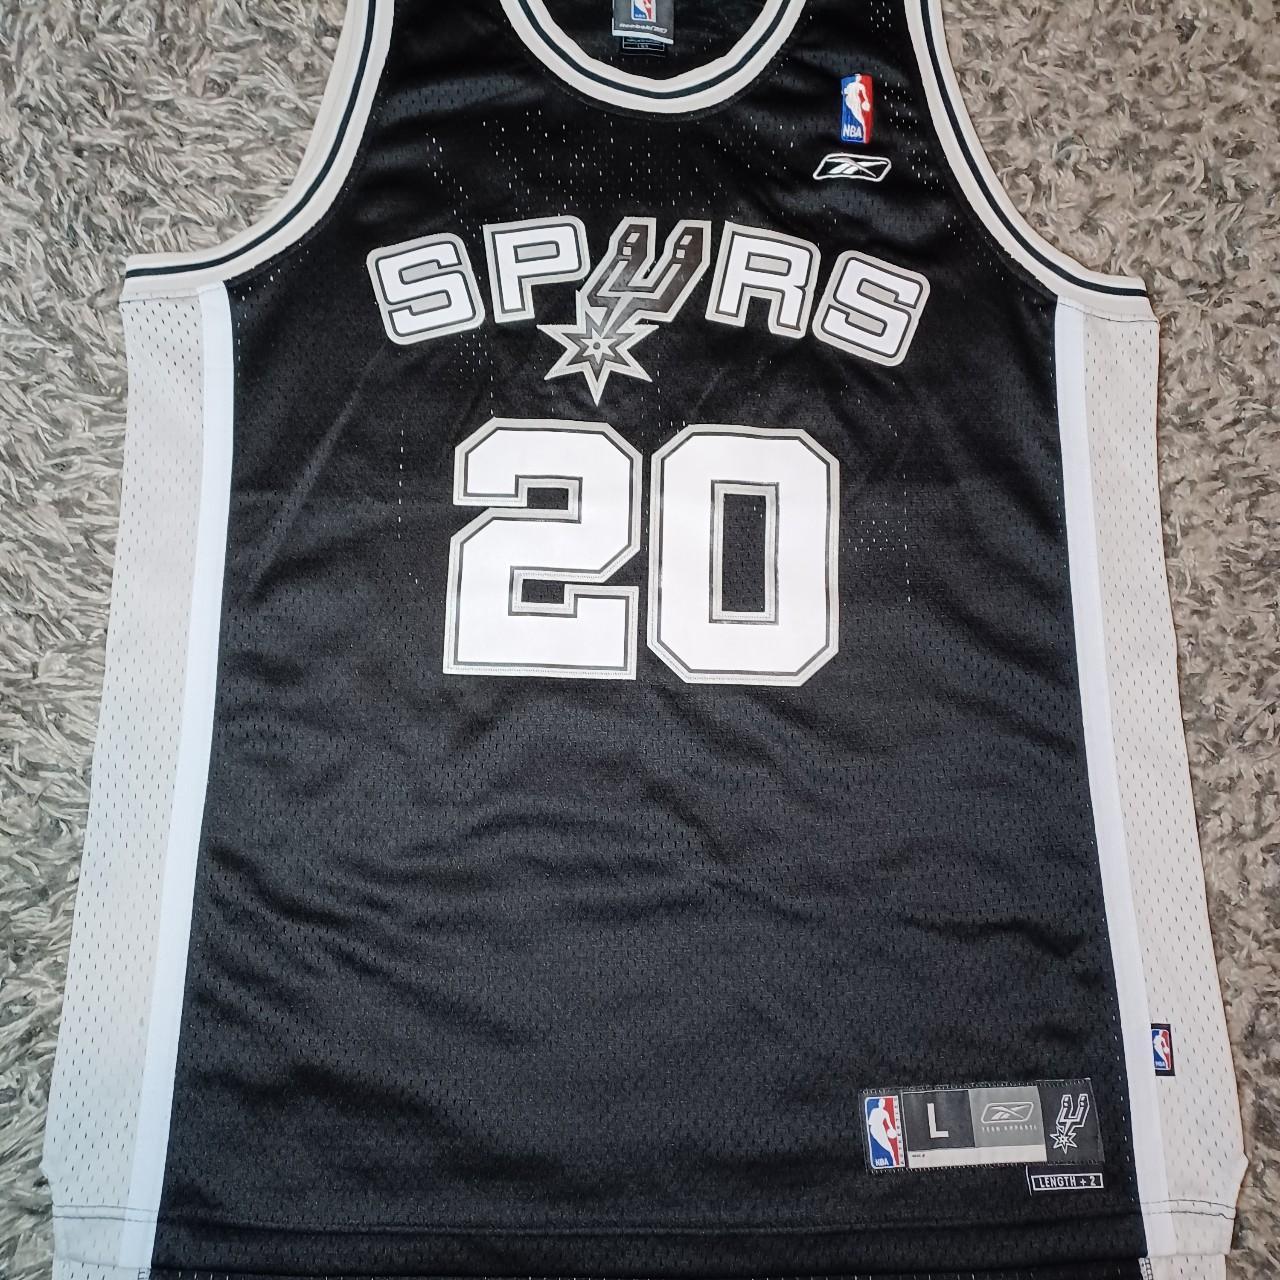 Reebok, Tops, Vintage Spurs Basketball Jersey